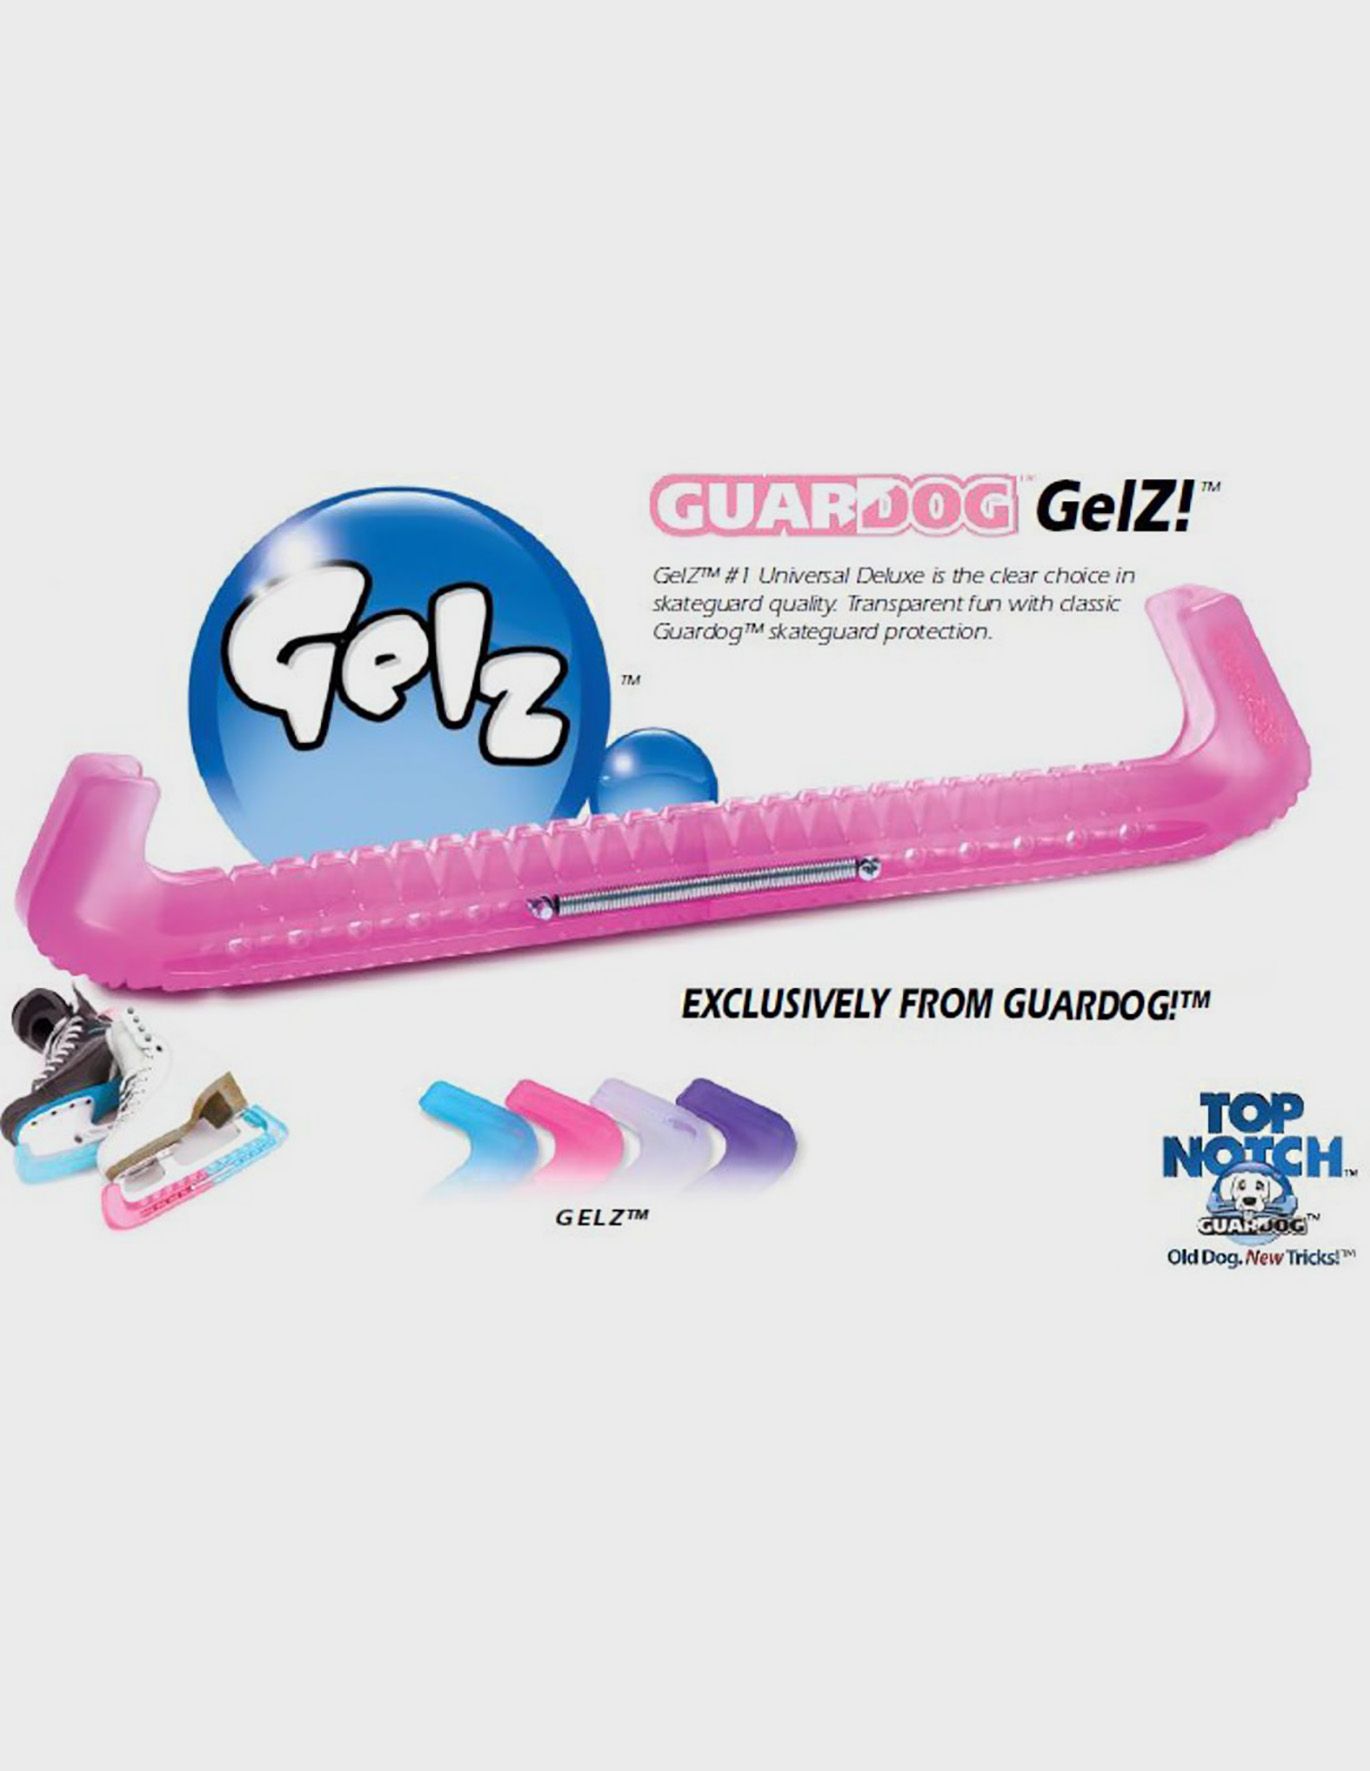 Guardog Gelz No 1 Top Notch Ice Skate Guards